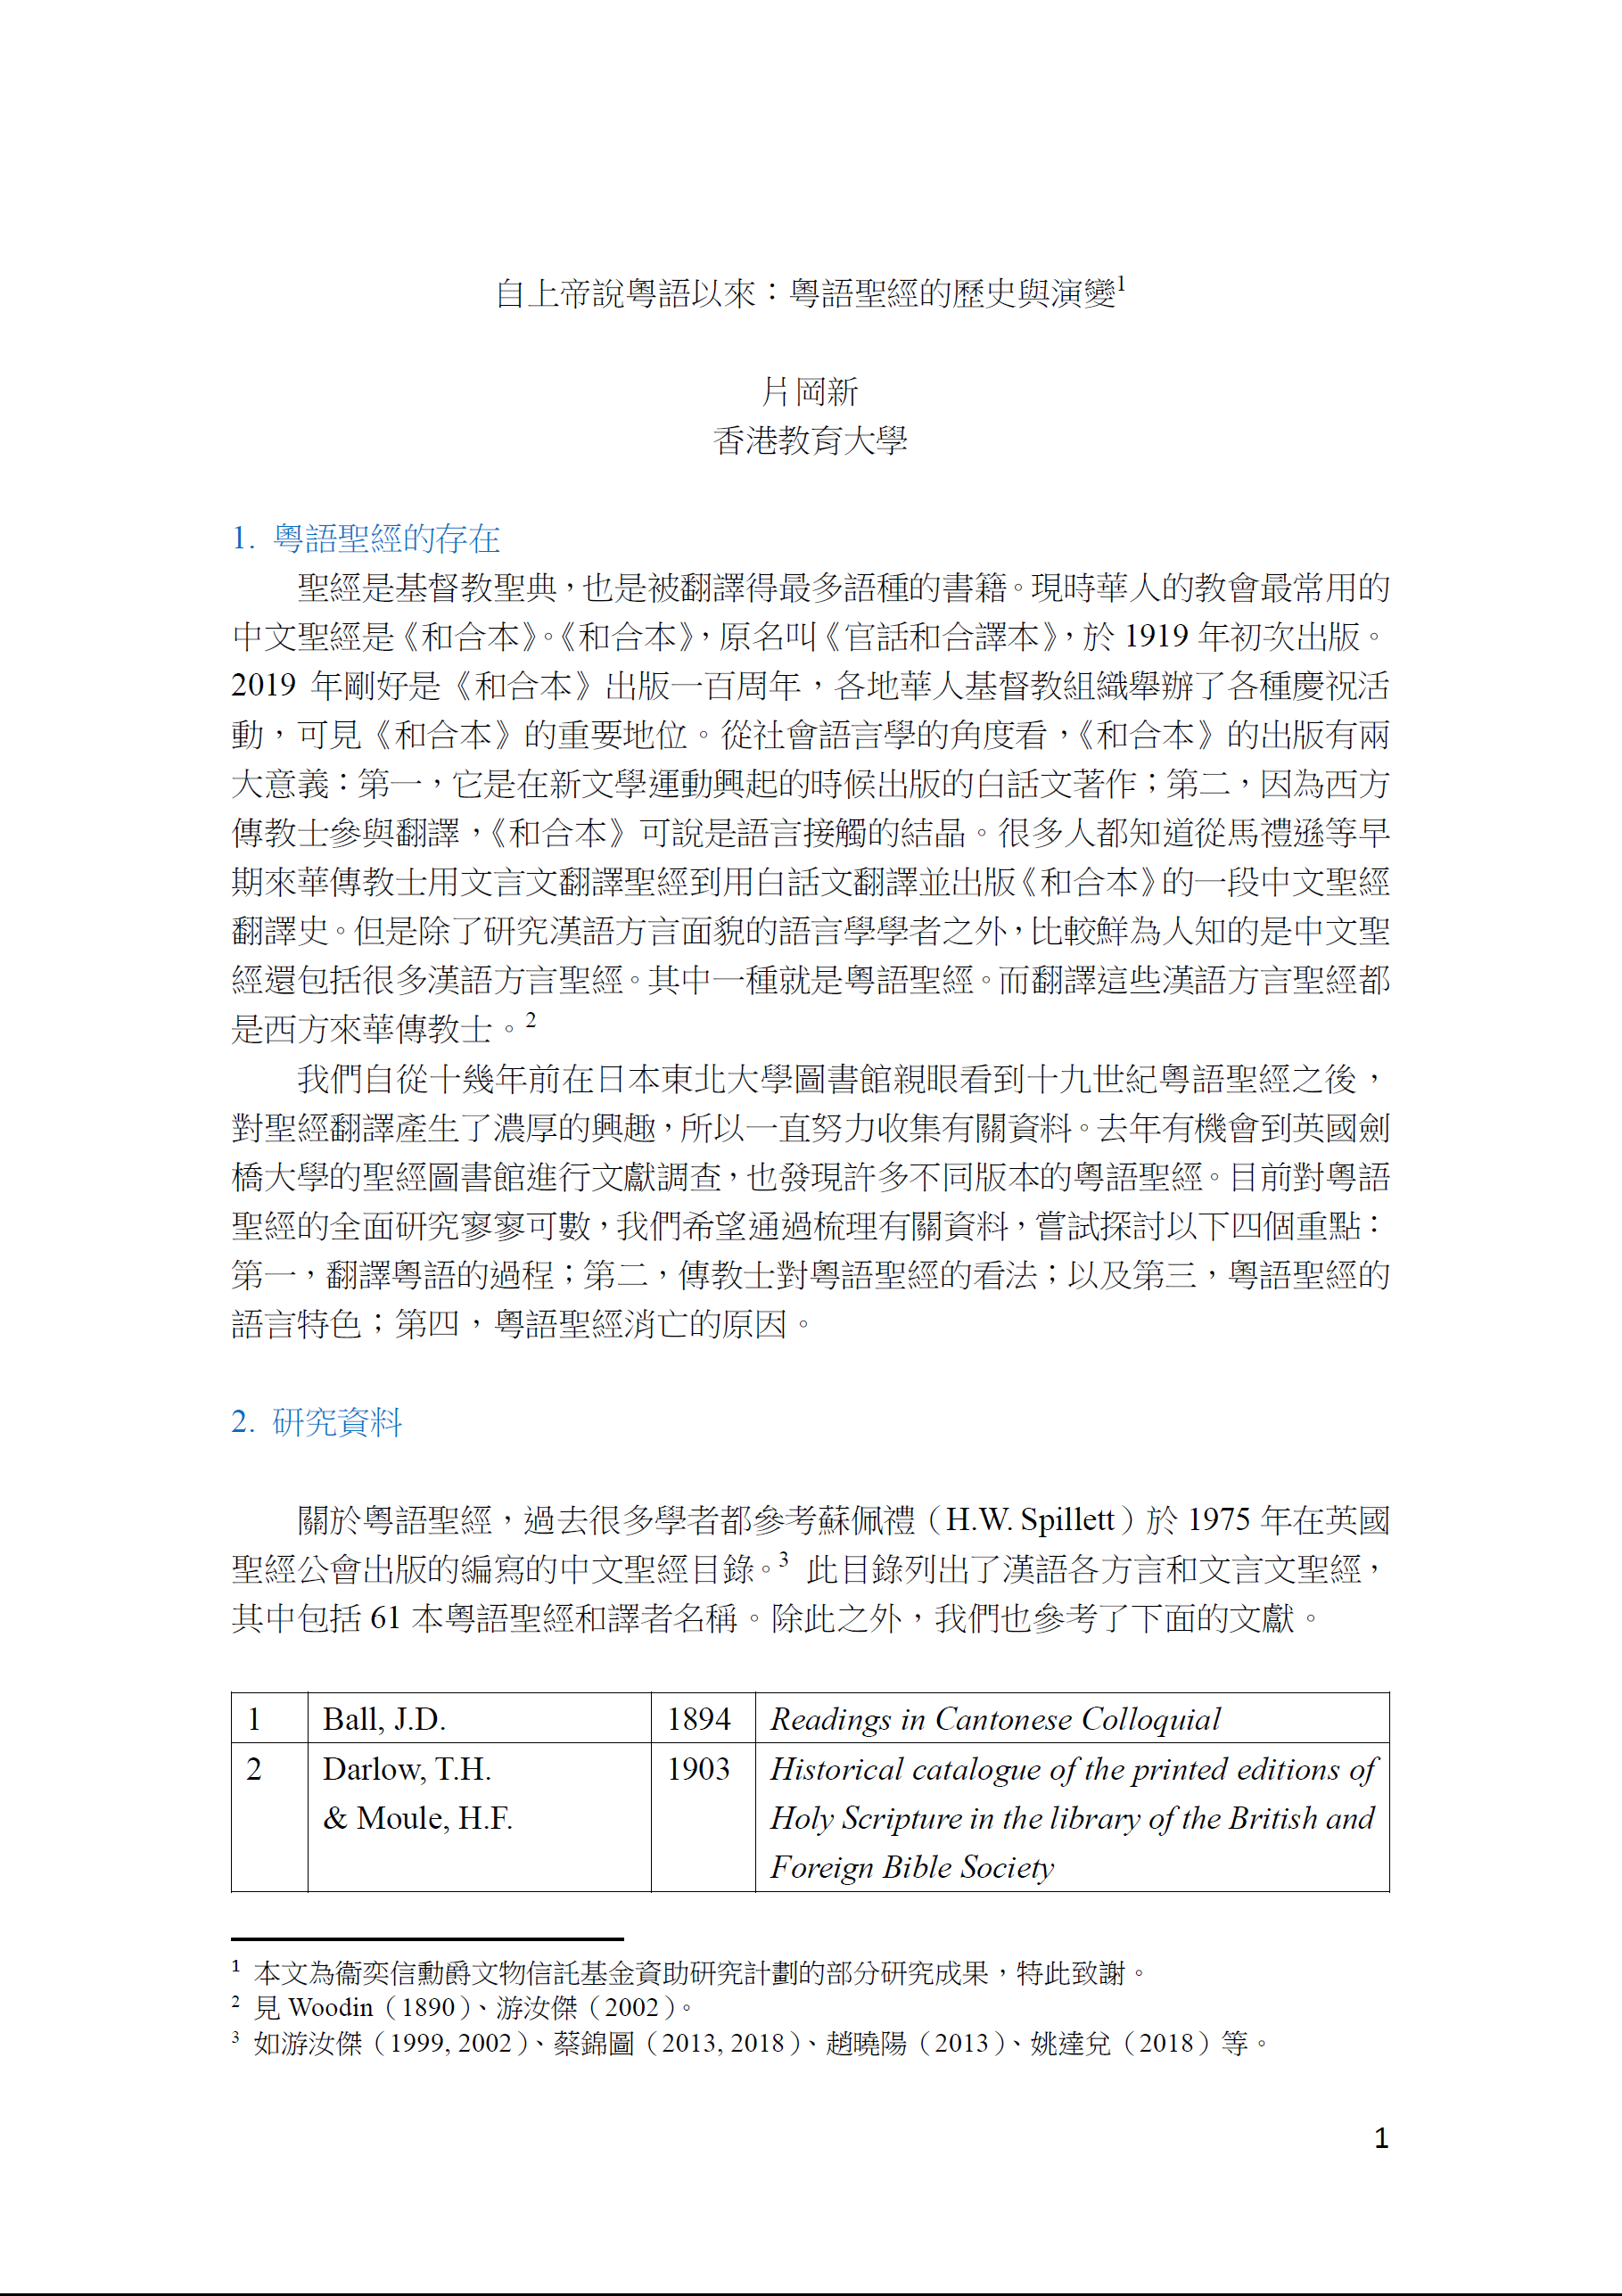 A Chinese research paper titled "自上帝說粵語以來：粵語聖經的歷史與演變"